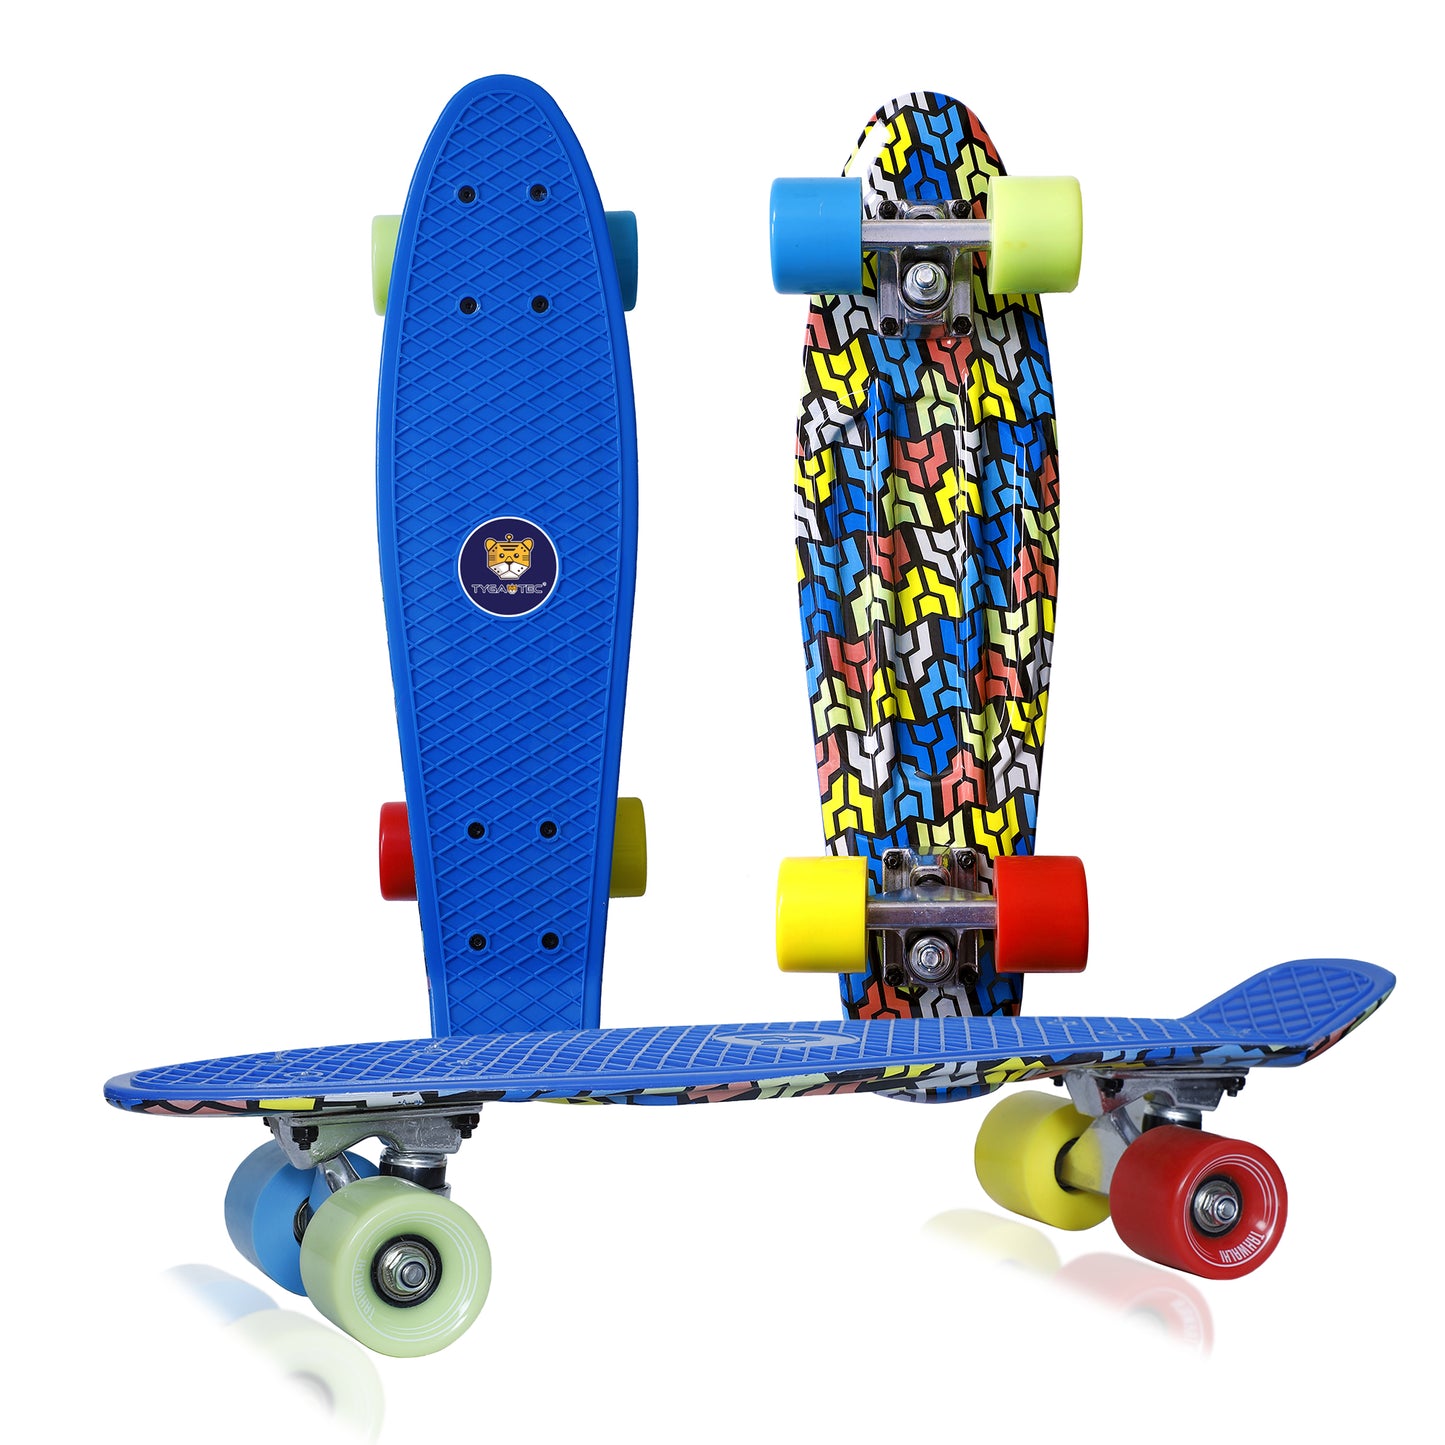 Tygatec skateboard